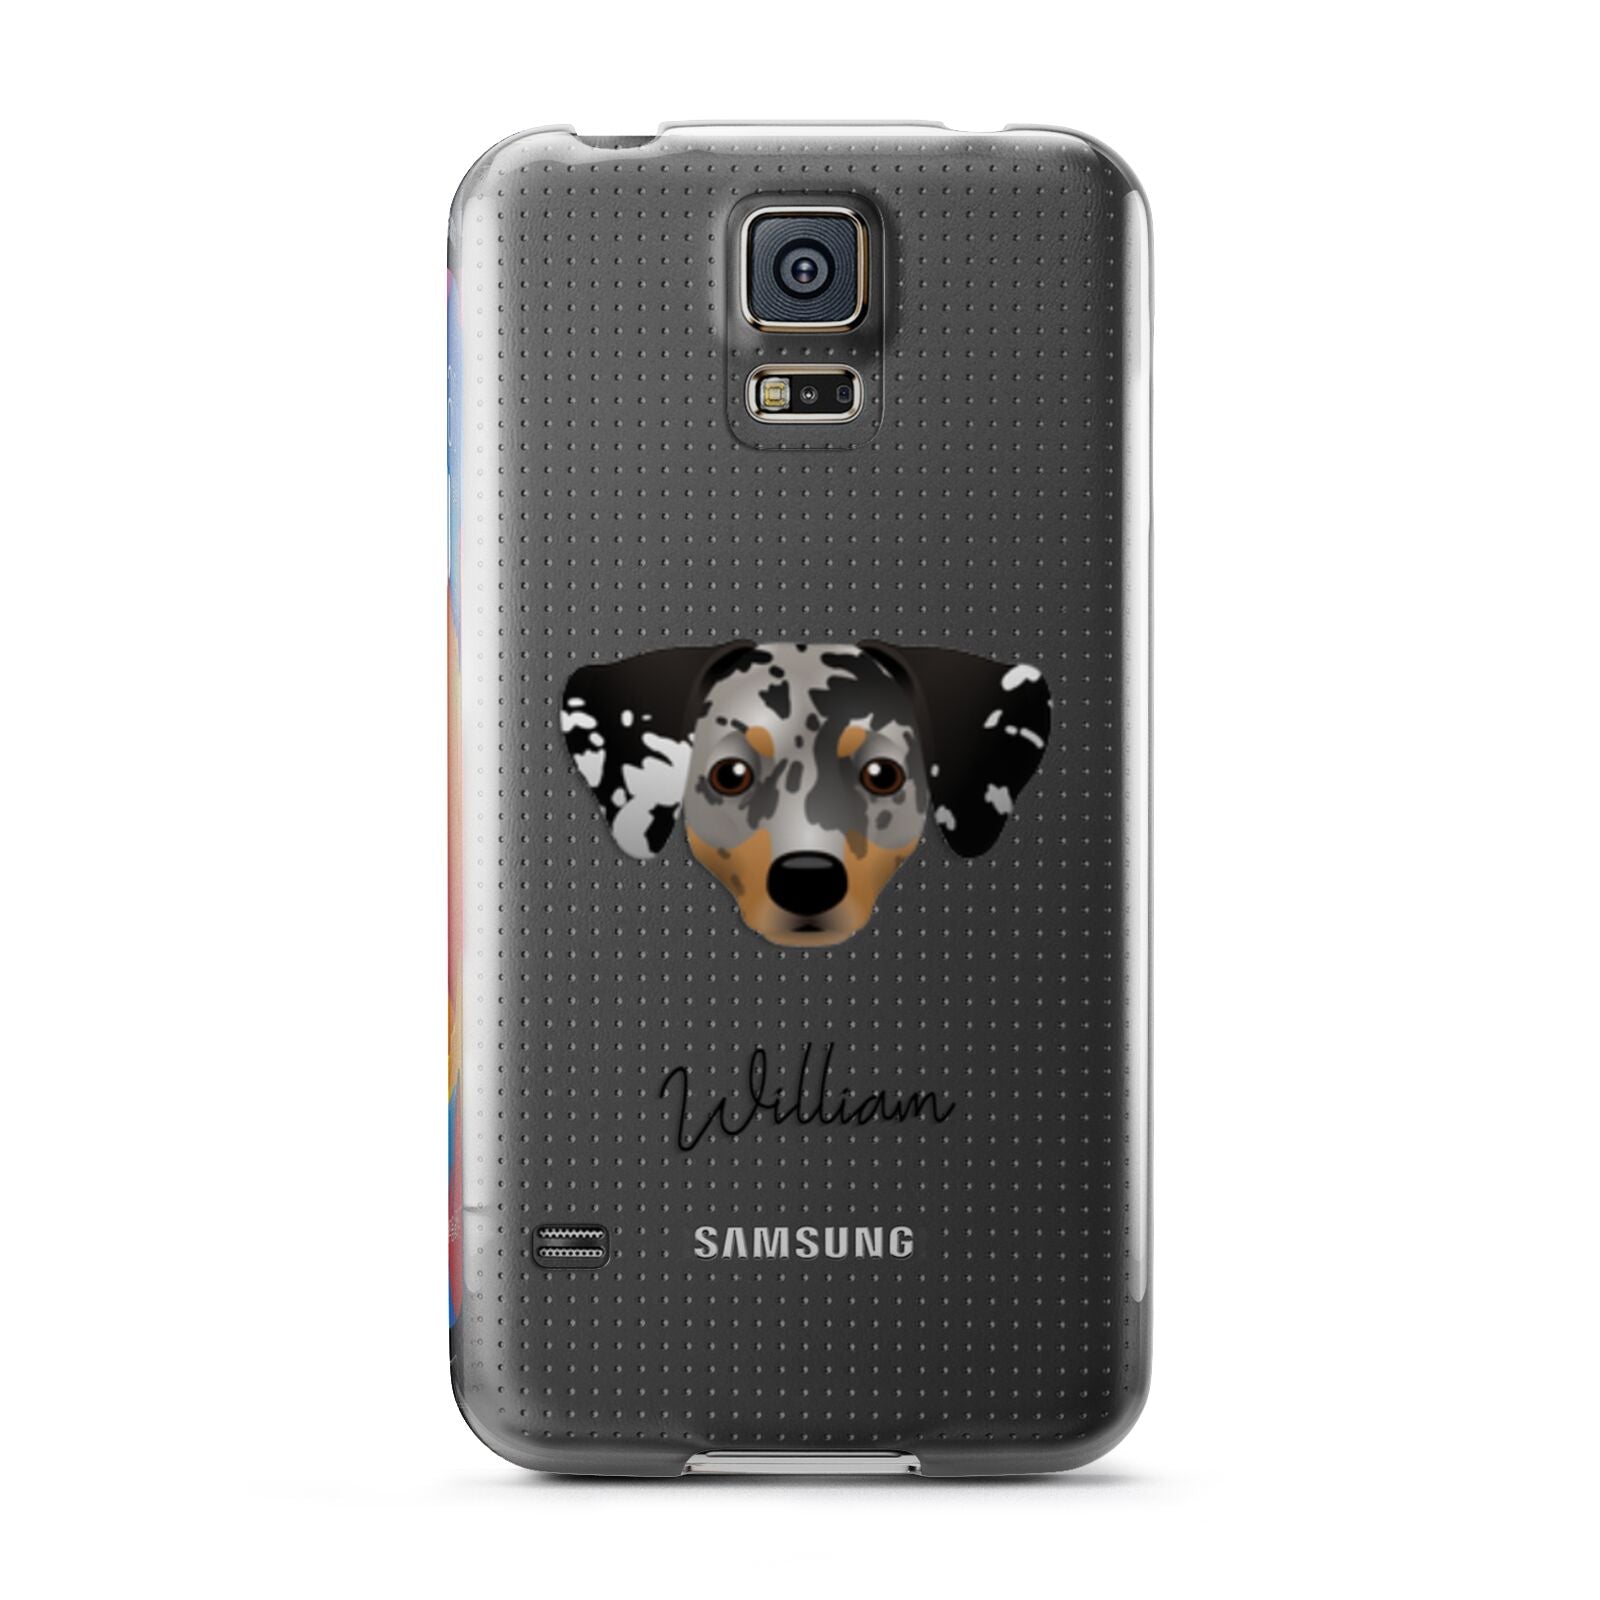 Chiweenie Personalised Samsung Galaxy S5 Case